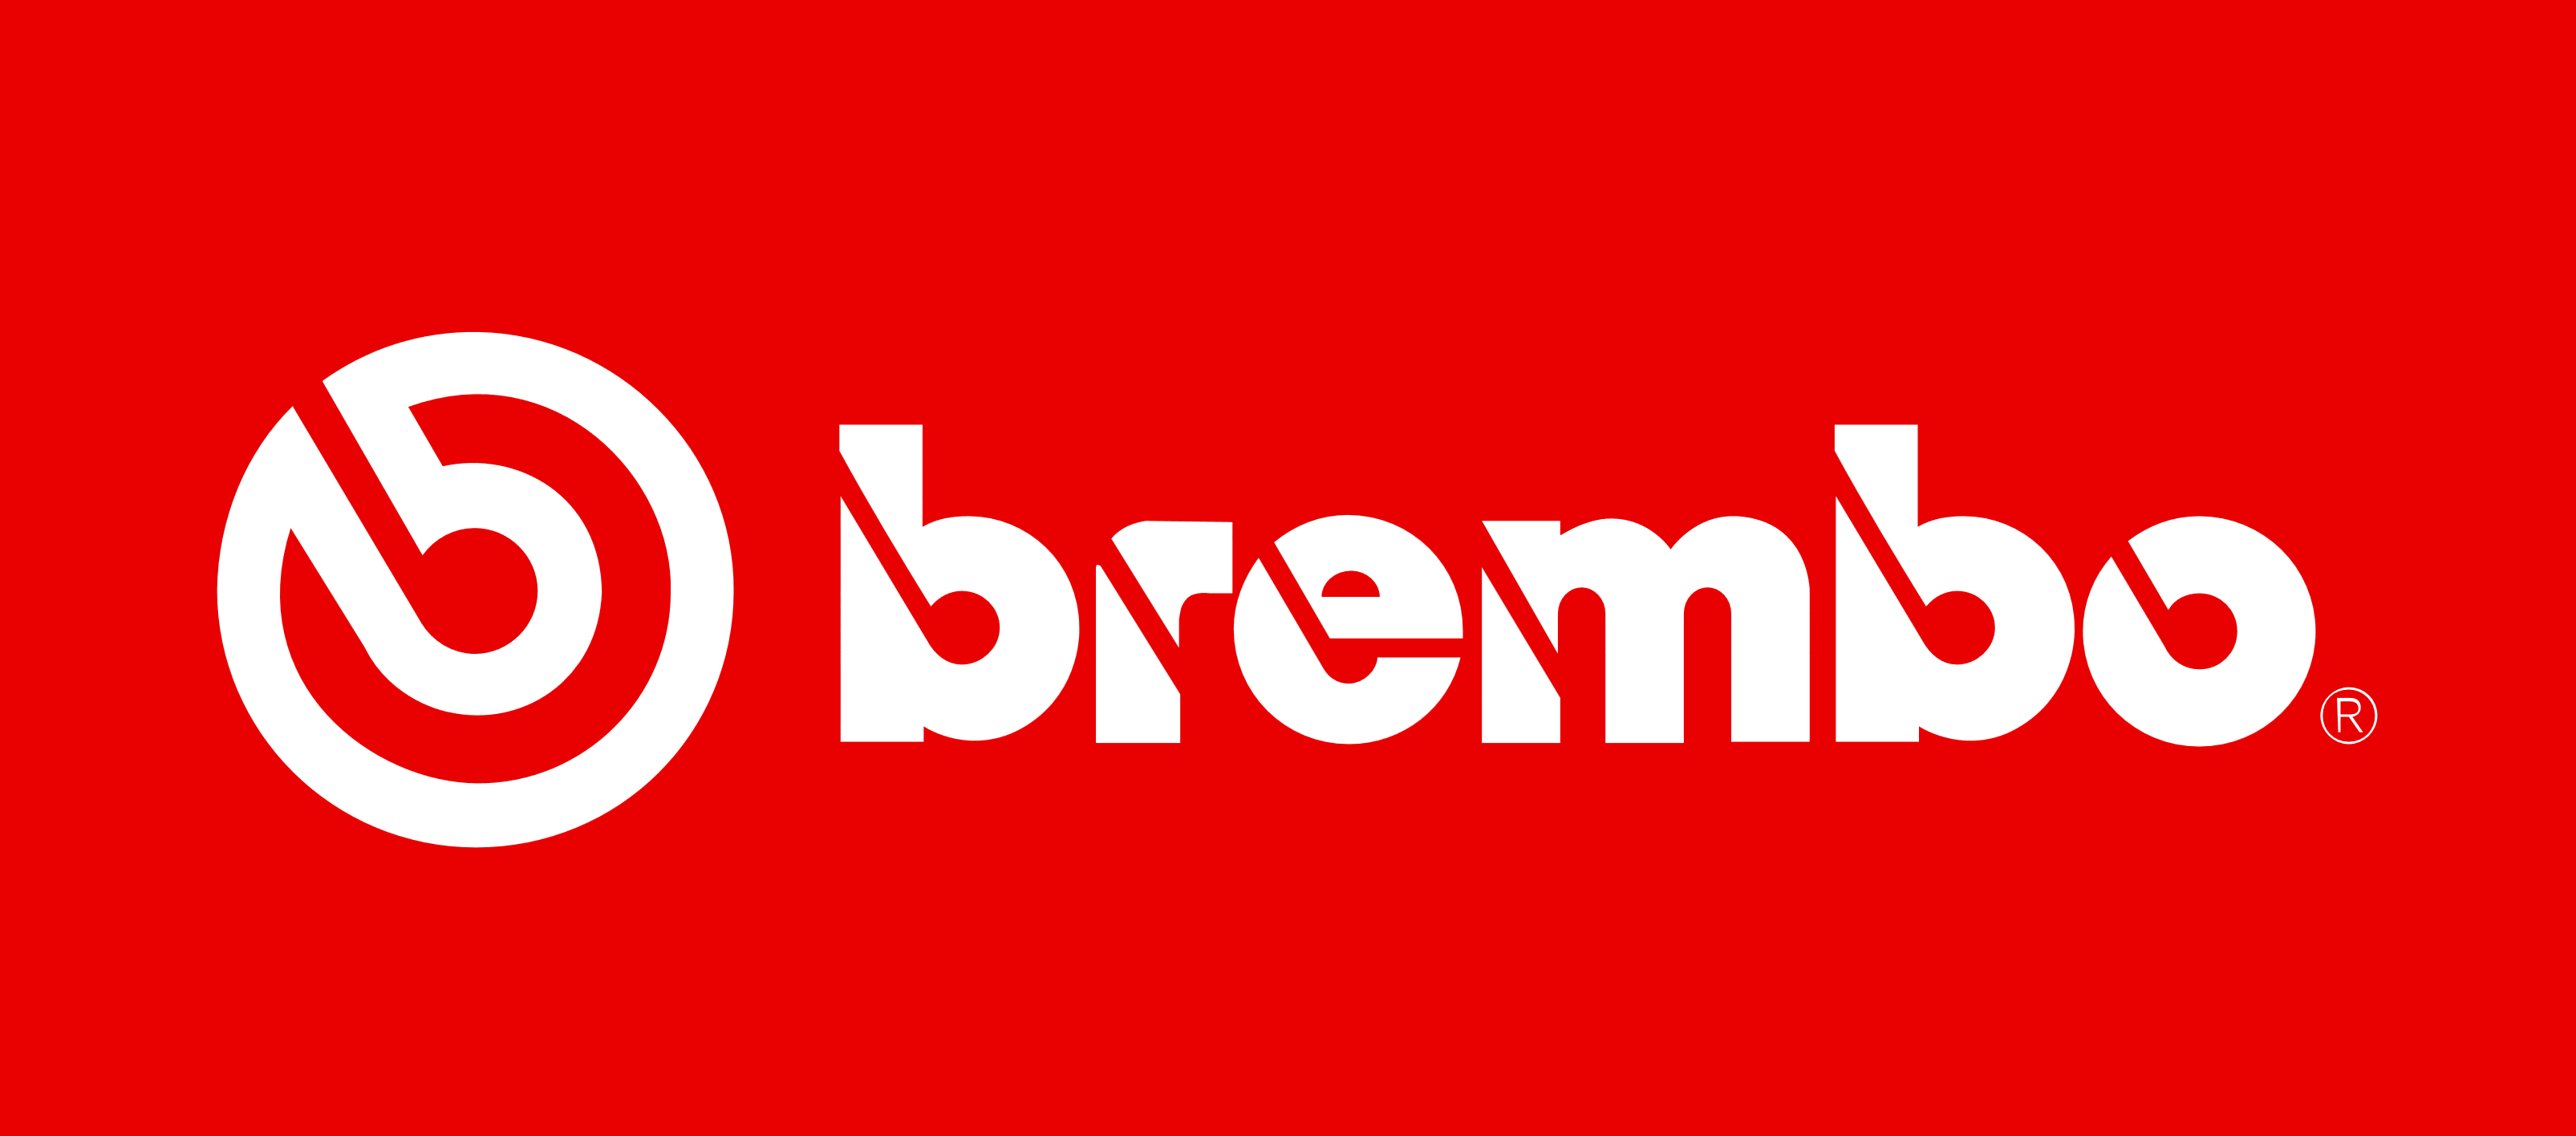 Brembo logo, logotype